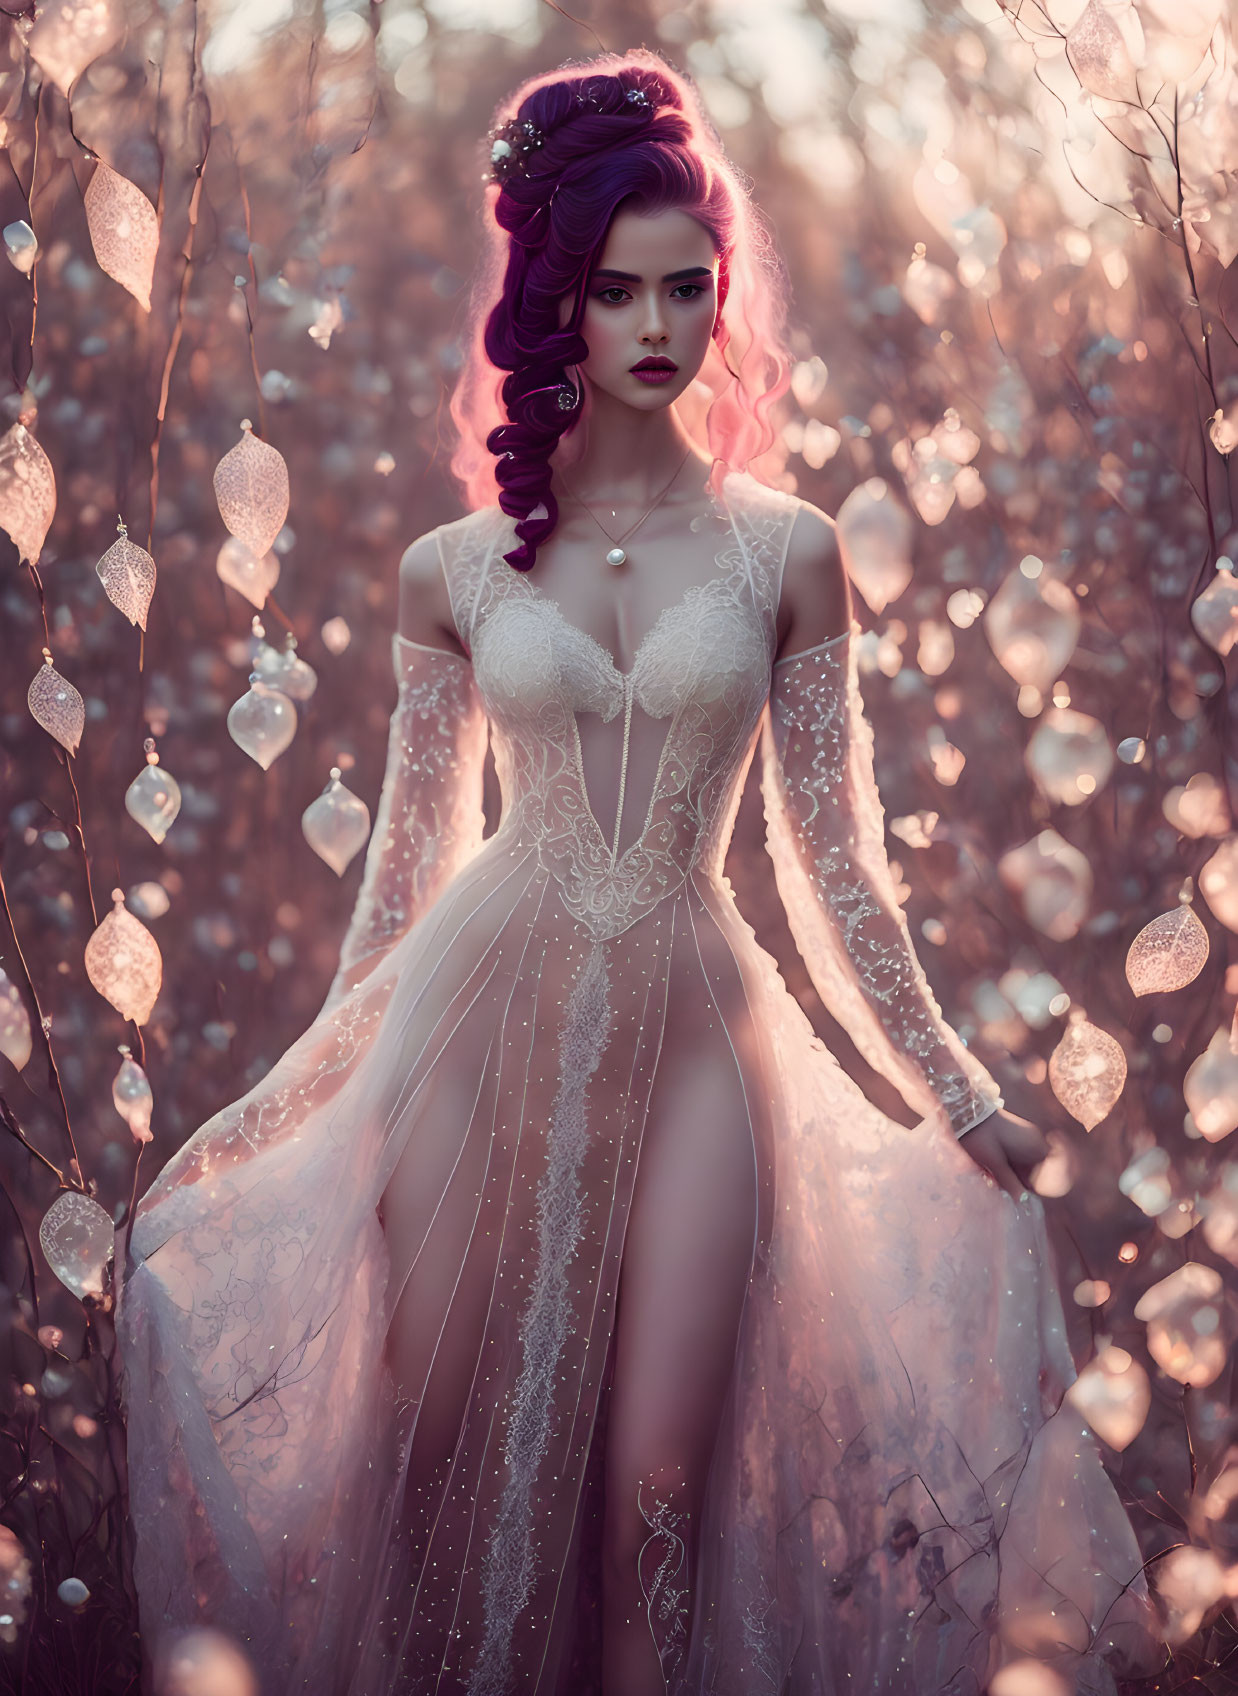 Romantic Fairytale Fantasy Wedding Gowns Melissa Sweet | David's Bridal